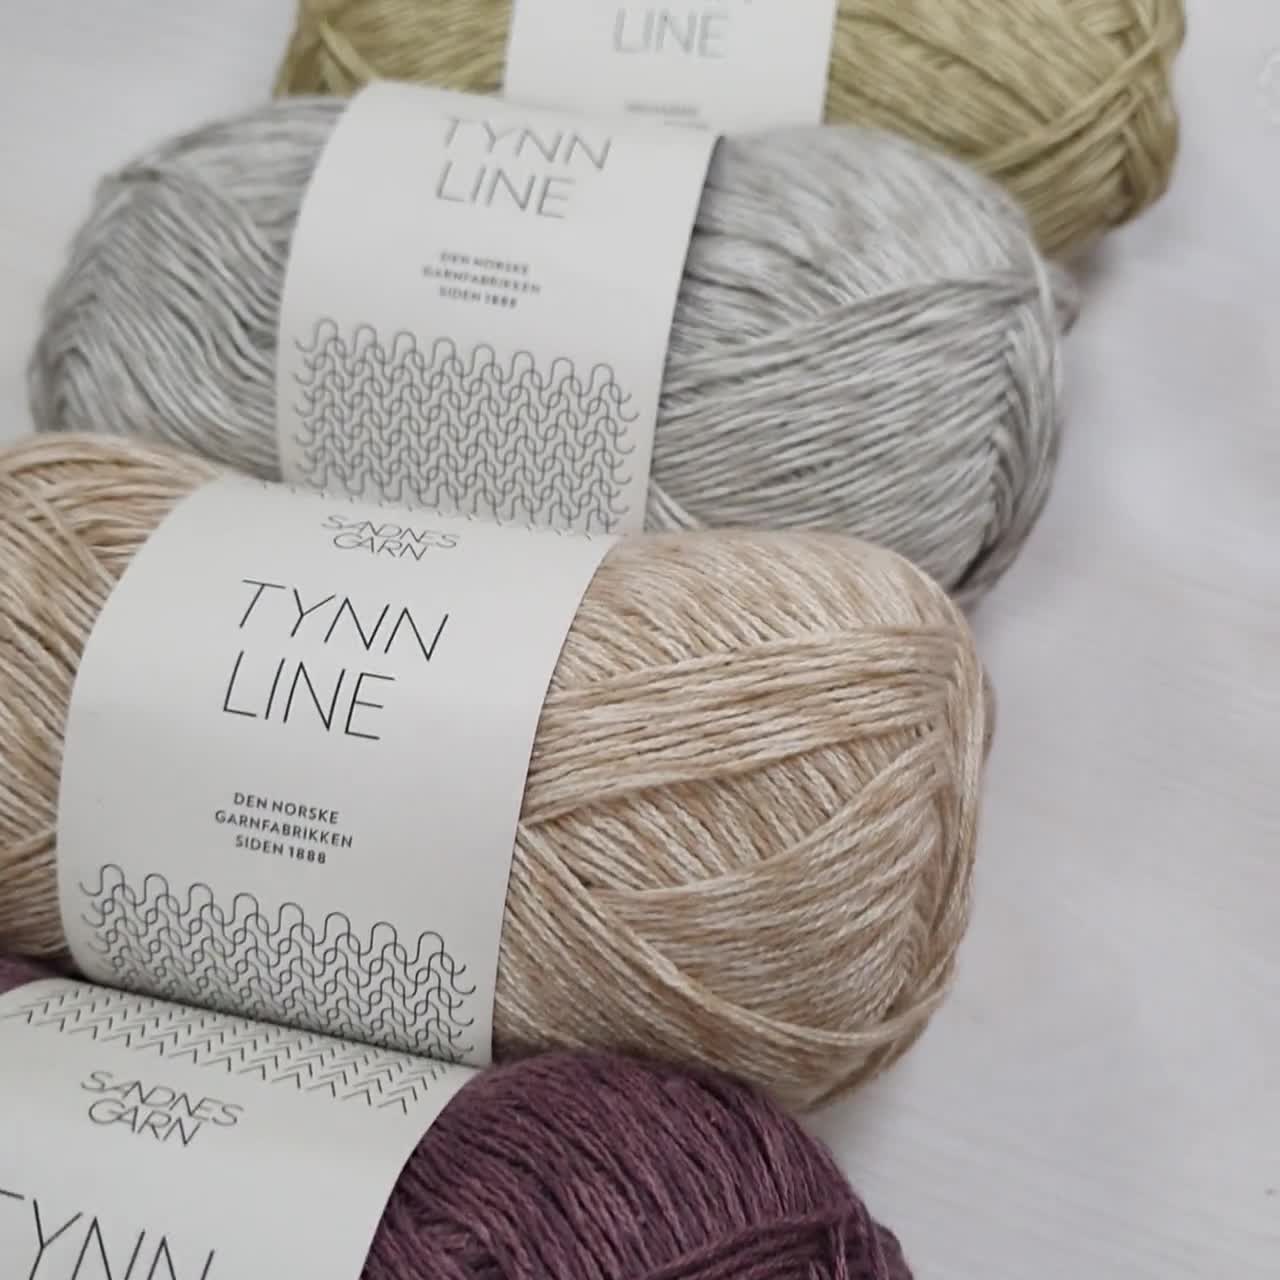 Få Barnlig Redaktør SANDNES GARN Tynn Line Knitting Yarn Beautiful Norwegian Yarn - Etsy